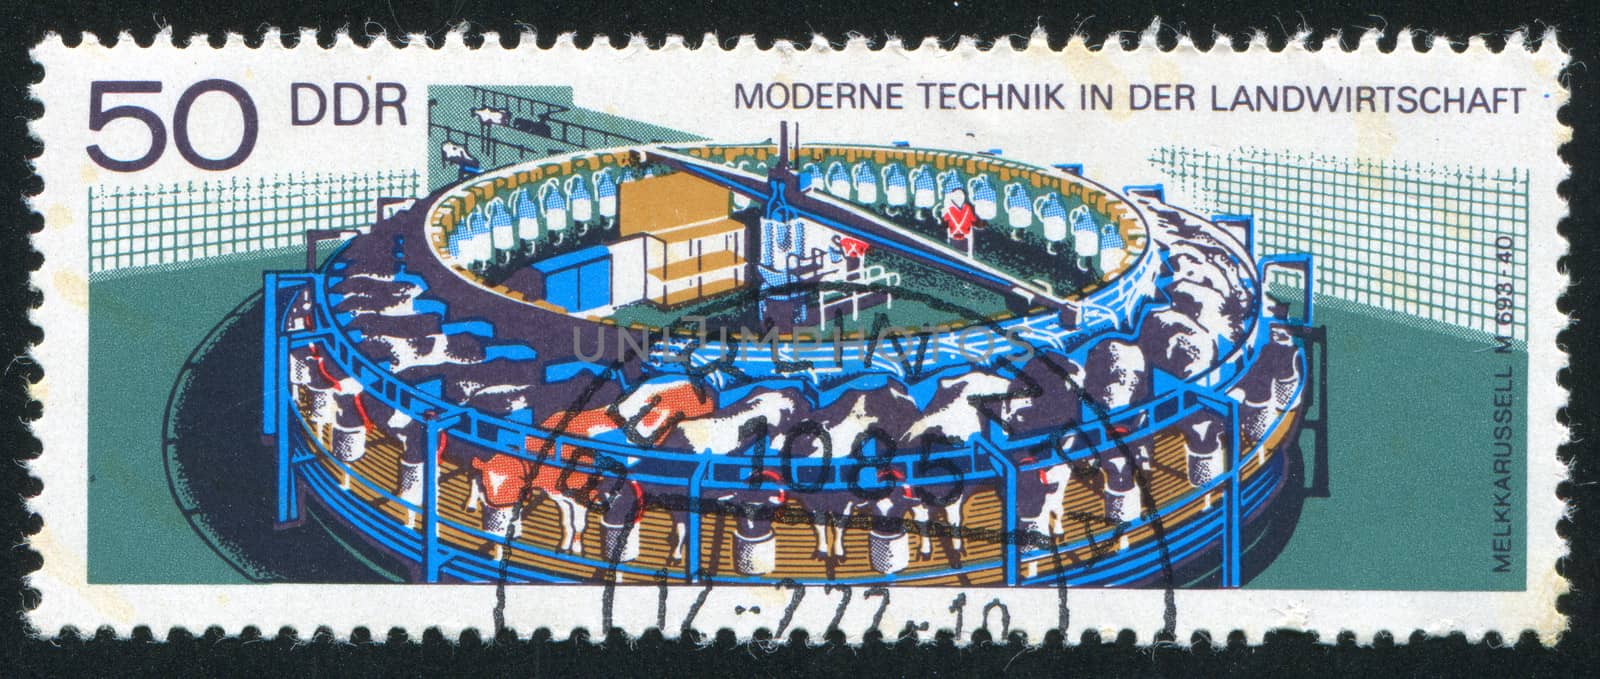 GERMANY - CIRCA 1977: stamp printed by Germany, shows Rotating milking machine, circa 1977